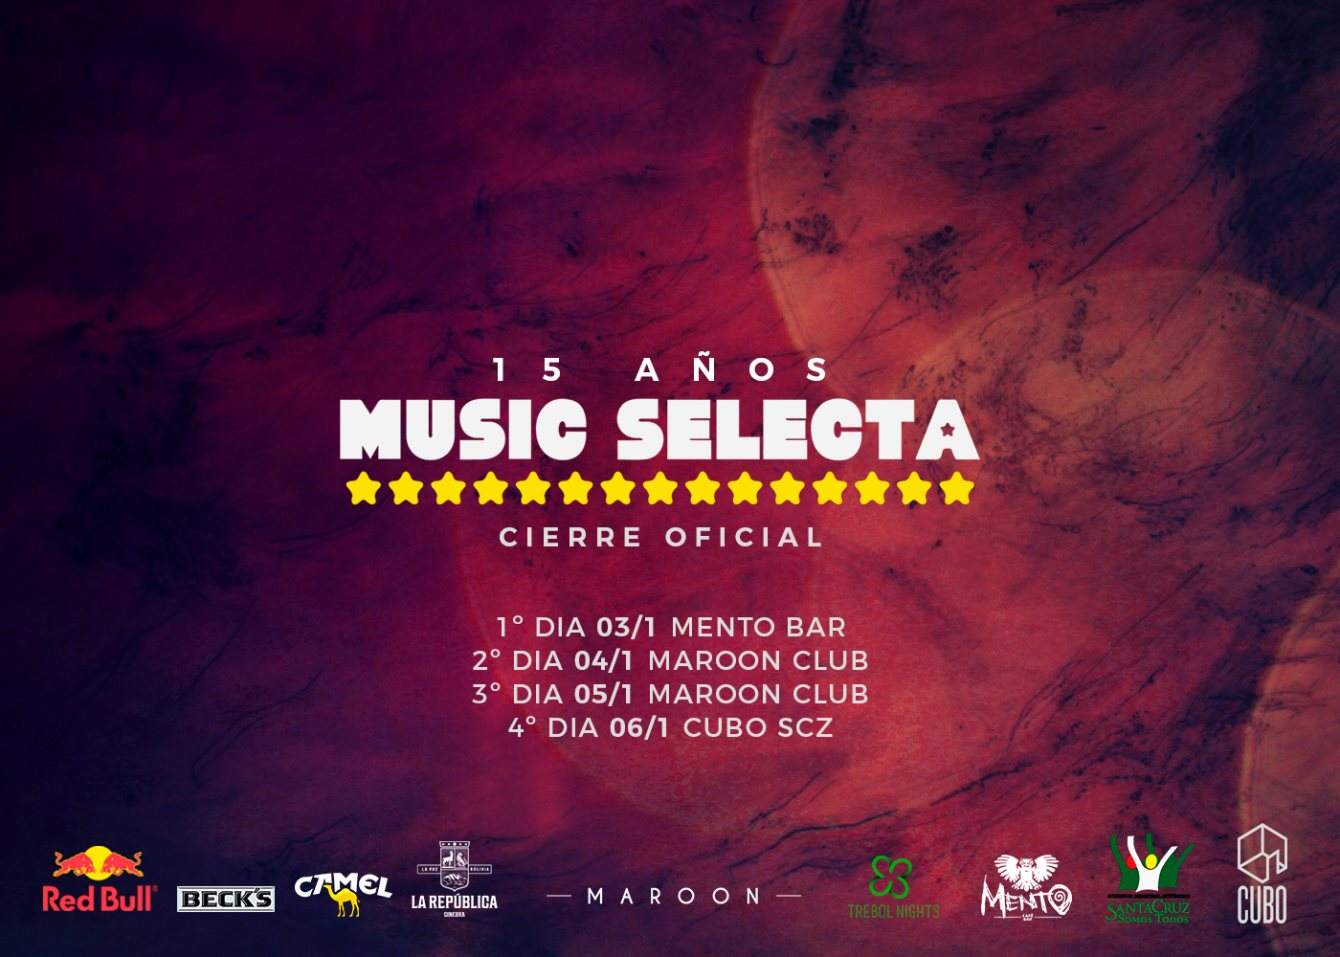 Music Selecta - Cierre Oficial at Maroon Club, Bolivia